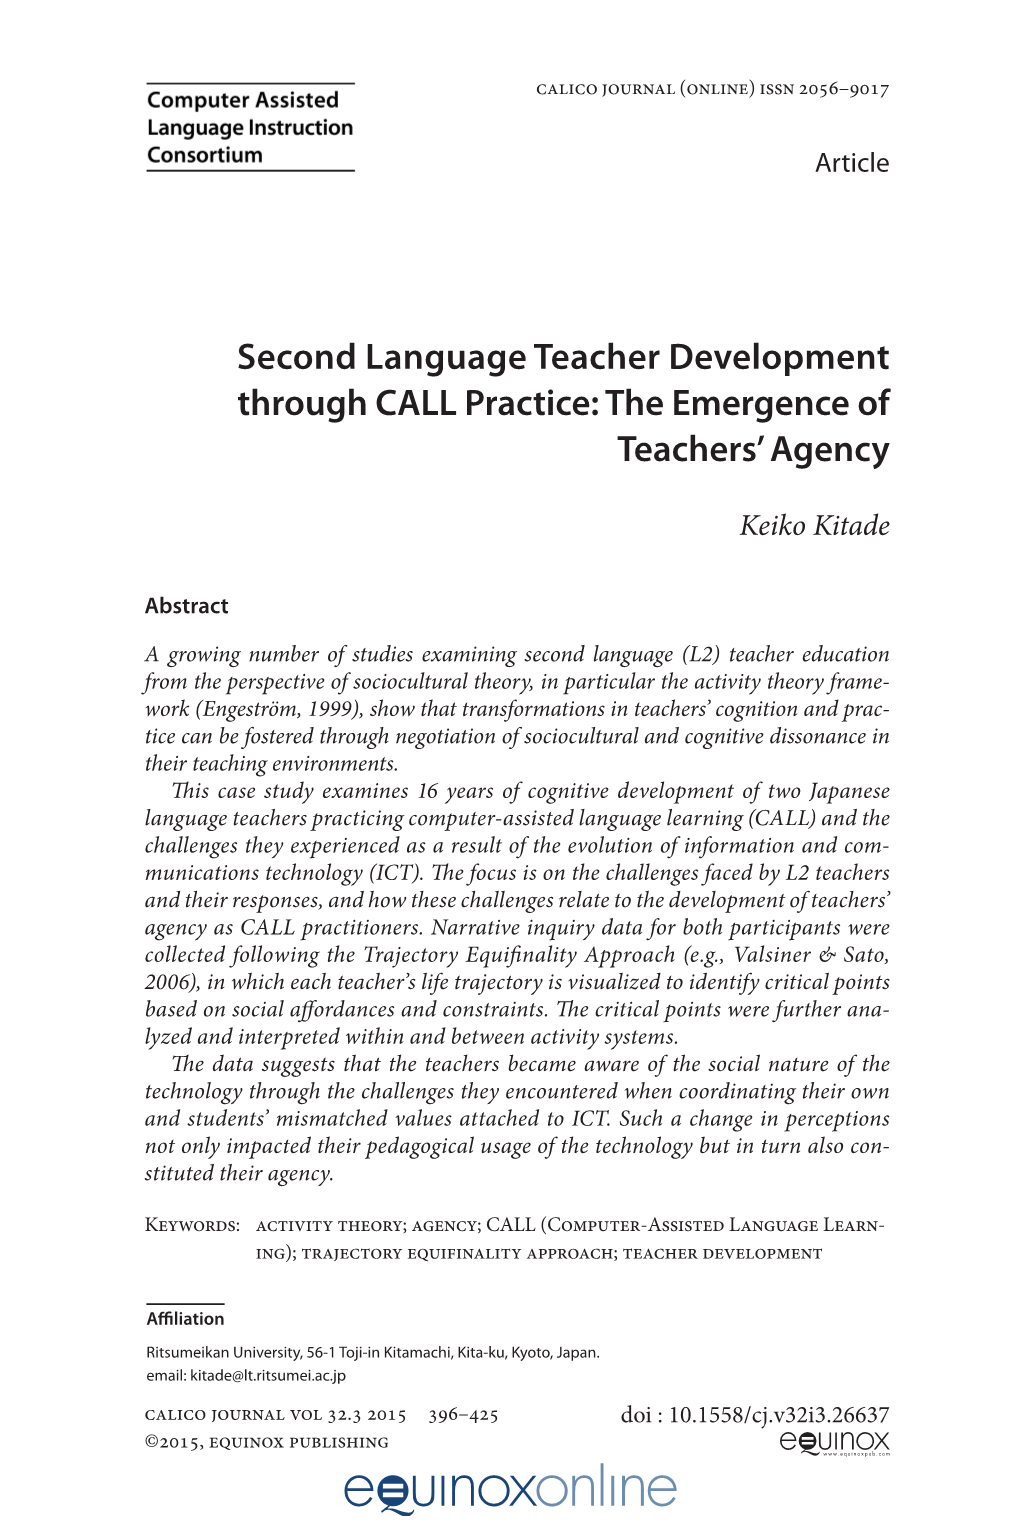 Second Language Teacher Development Through CALL Practice: the Emergence of Teachers’ Agency